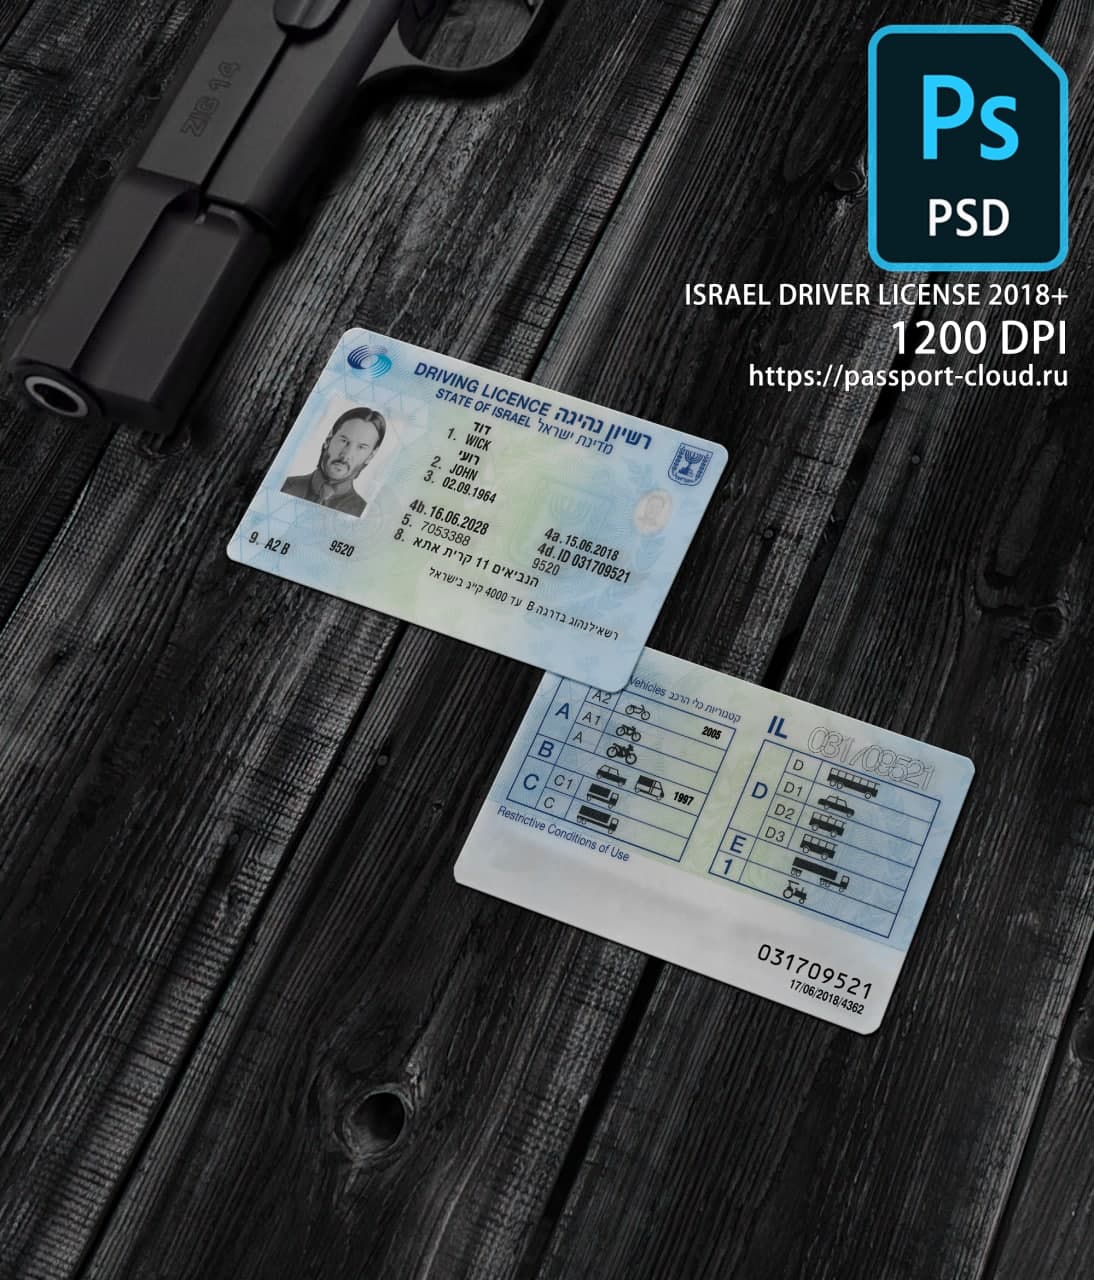 Israel Driver License 2018+1